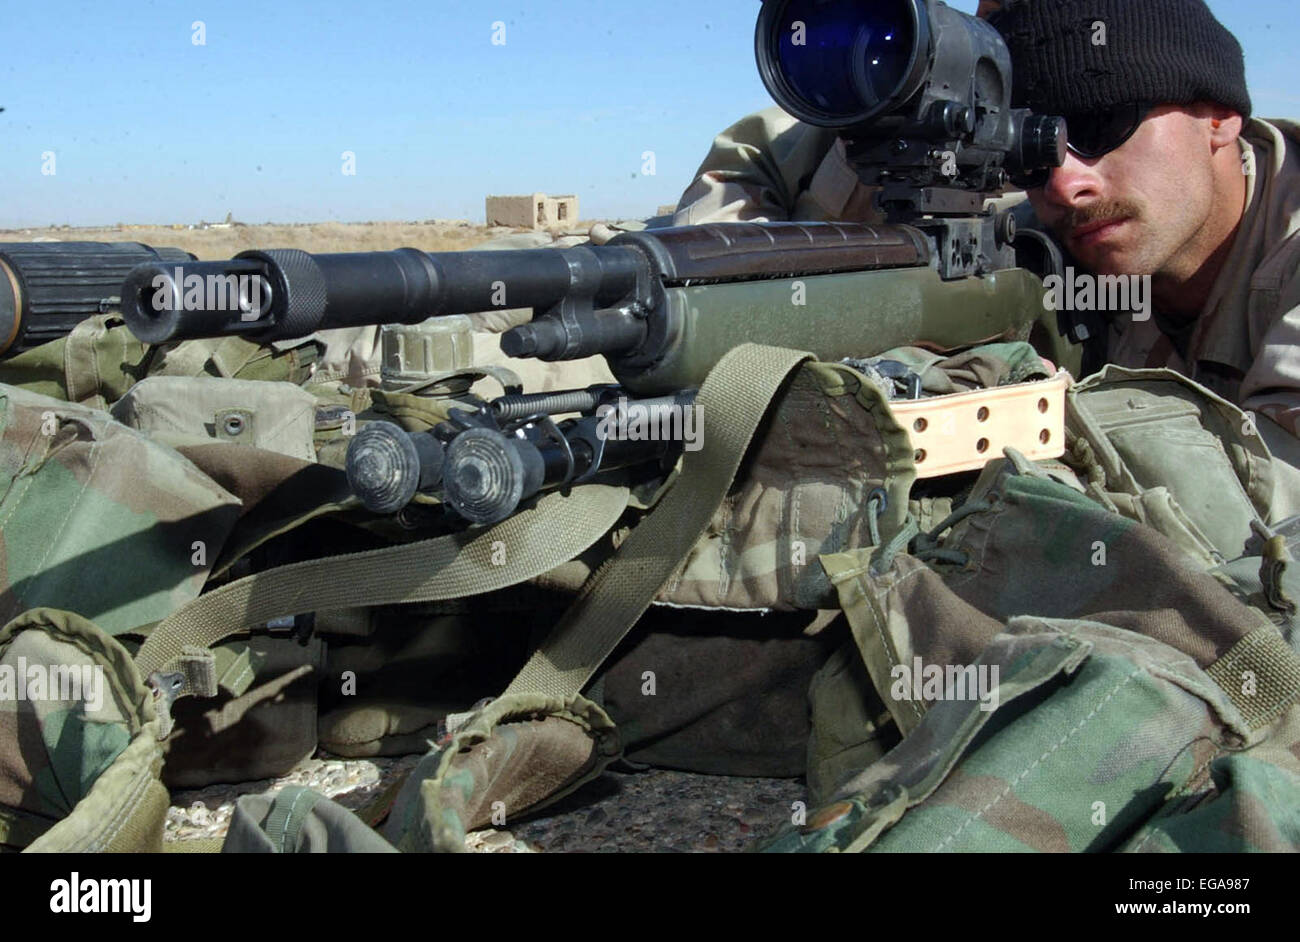 MARINE estadounidense con M-14DMR (Designado Marksman Rifle) en Kandahar, Afganistán en 2002 Foto de stock